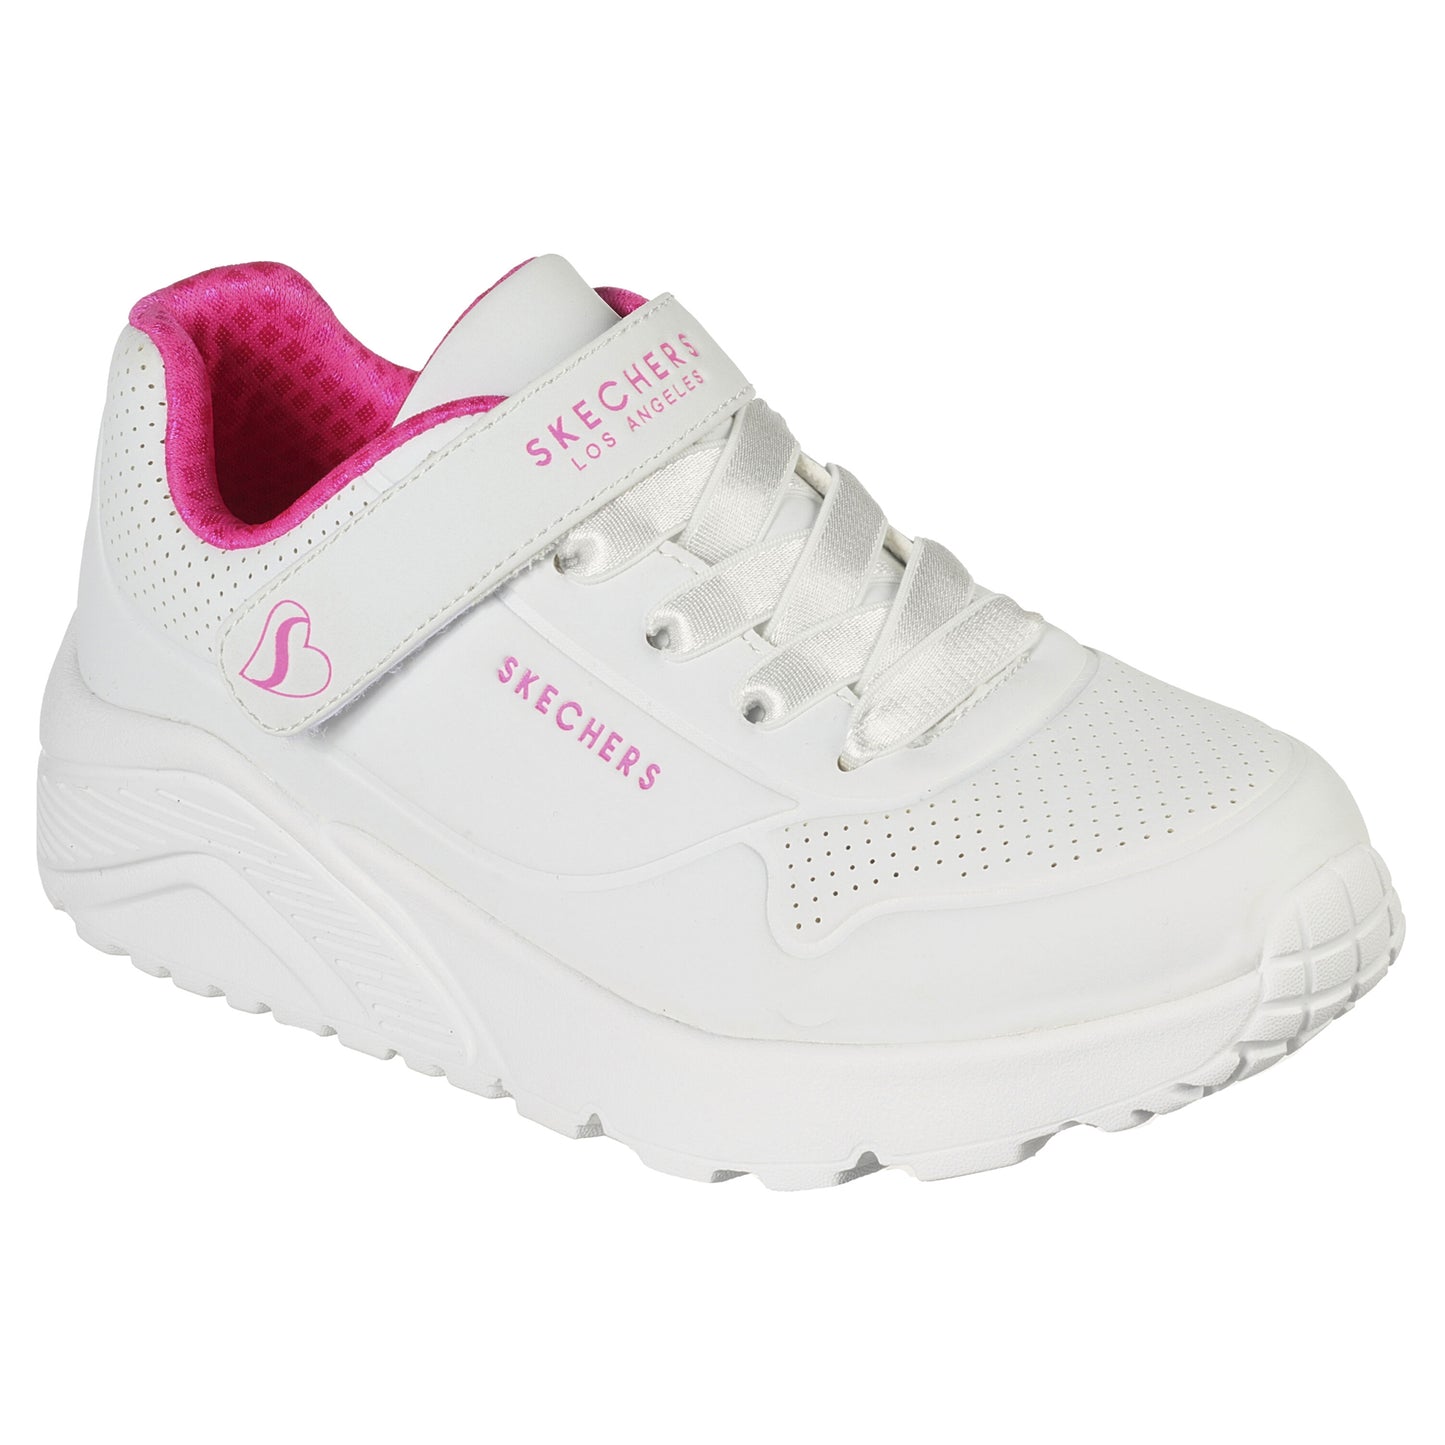 Skechers Kids Uno Lite White Hot Pink Platform Trainers Shoes